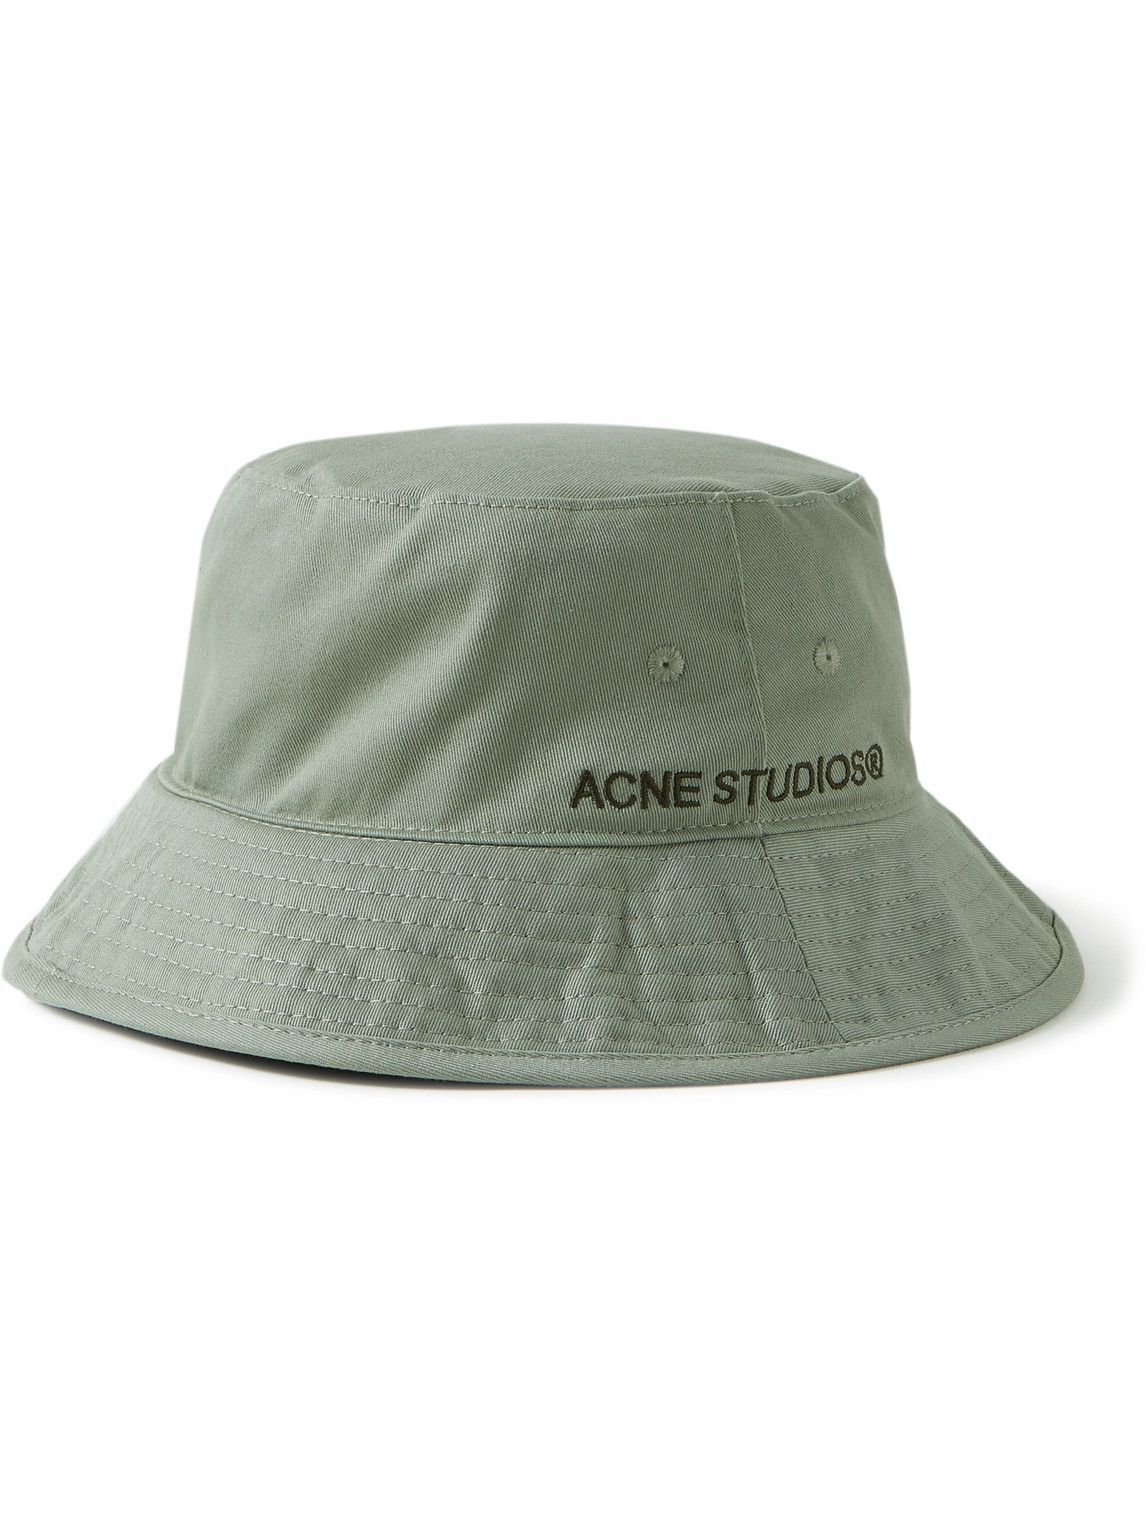 Acne Studios - Logo-Embroidered Cotton-Twill Bucket Hat Acne Studios